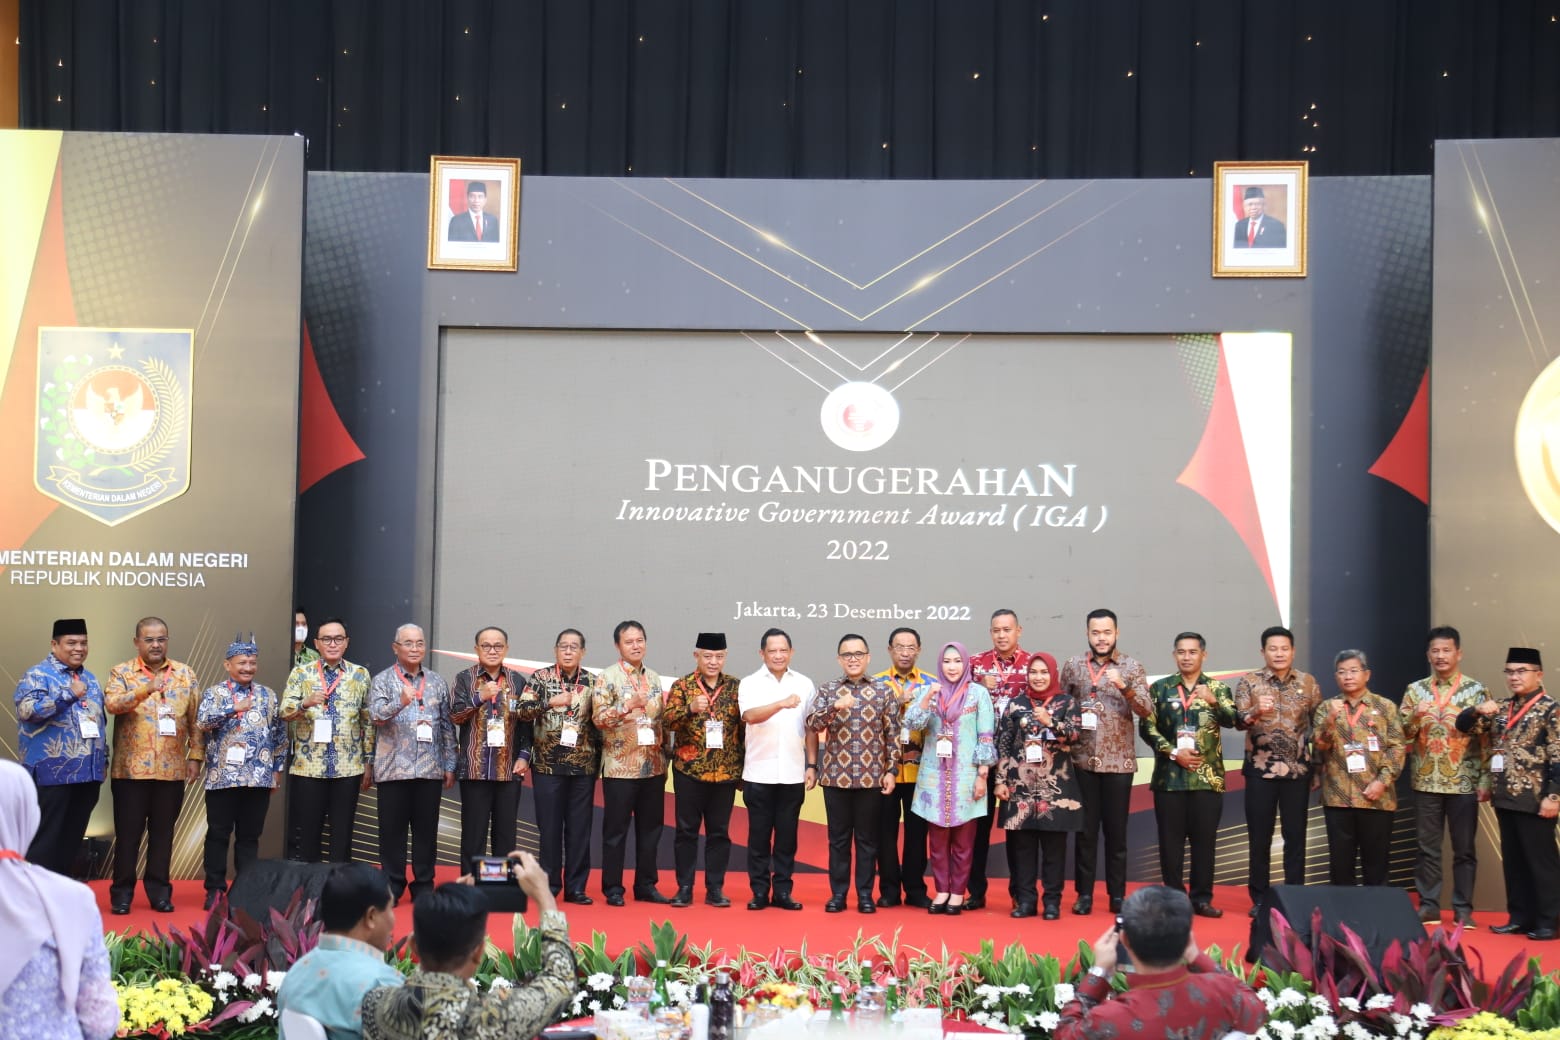 Tabalong Kembali Raih Juara Keempat Innovative Government Award